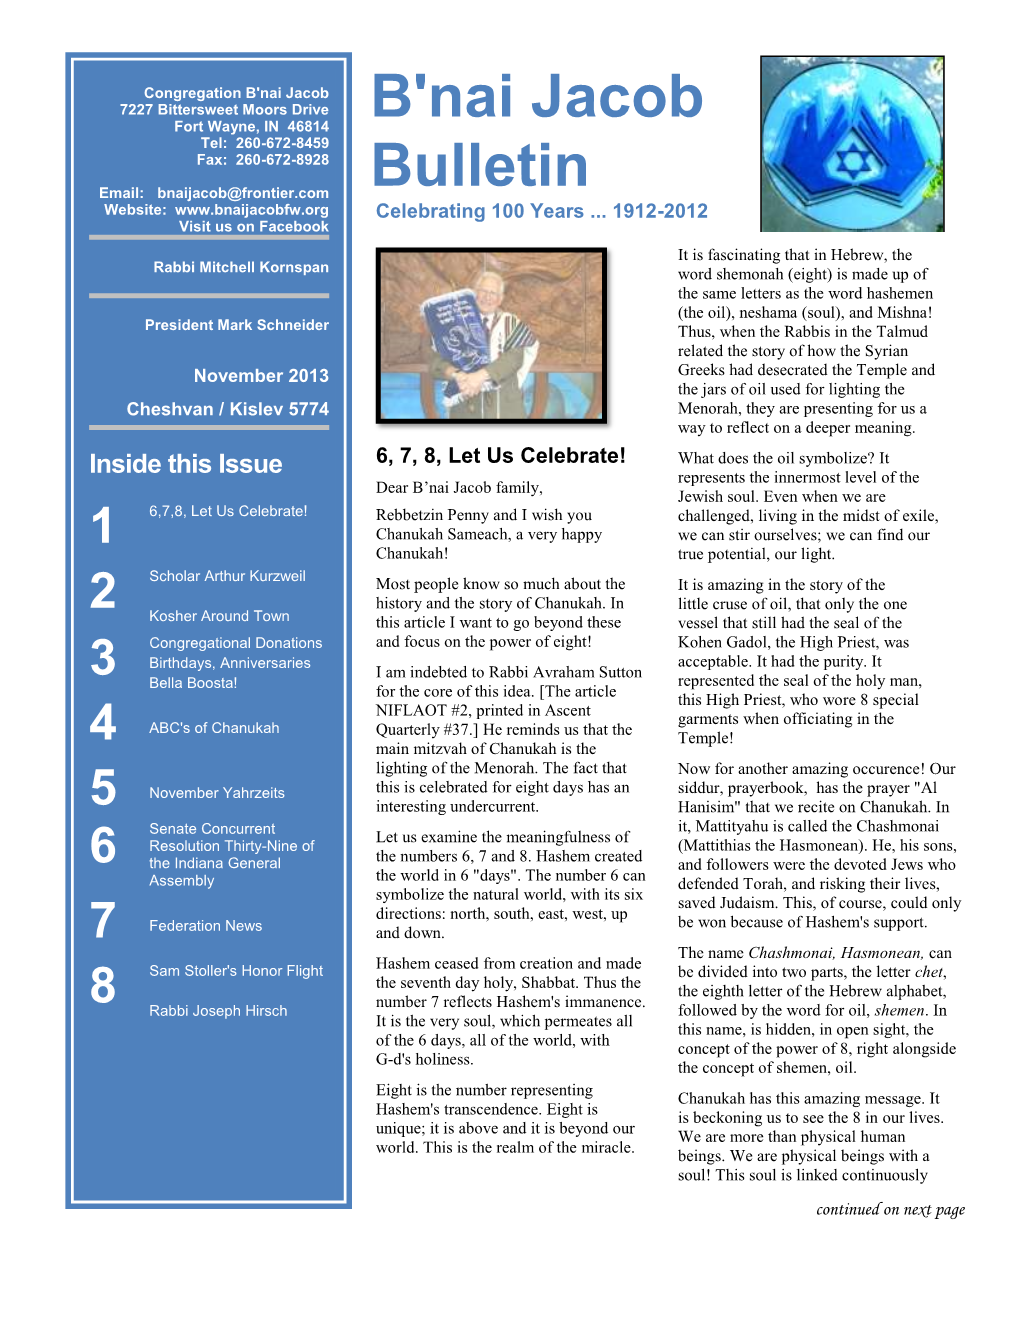 B'nai Jacob Bulletin Bulletin